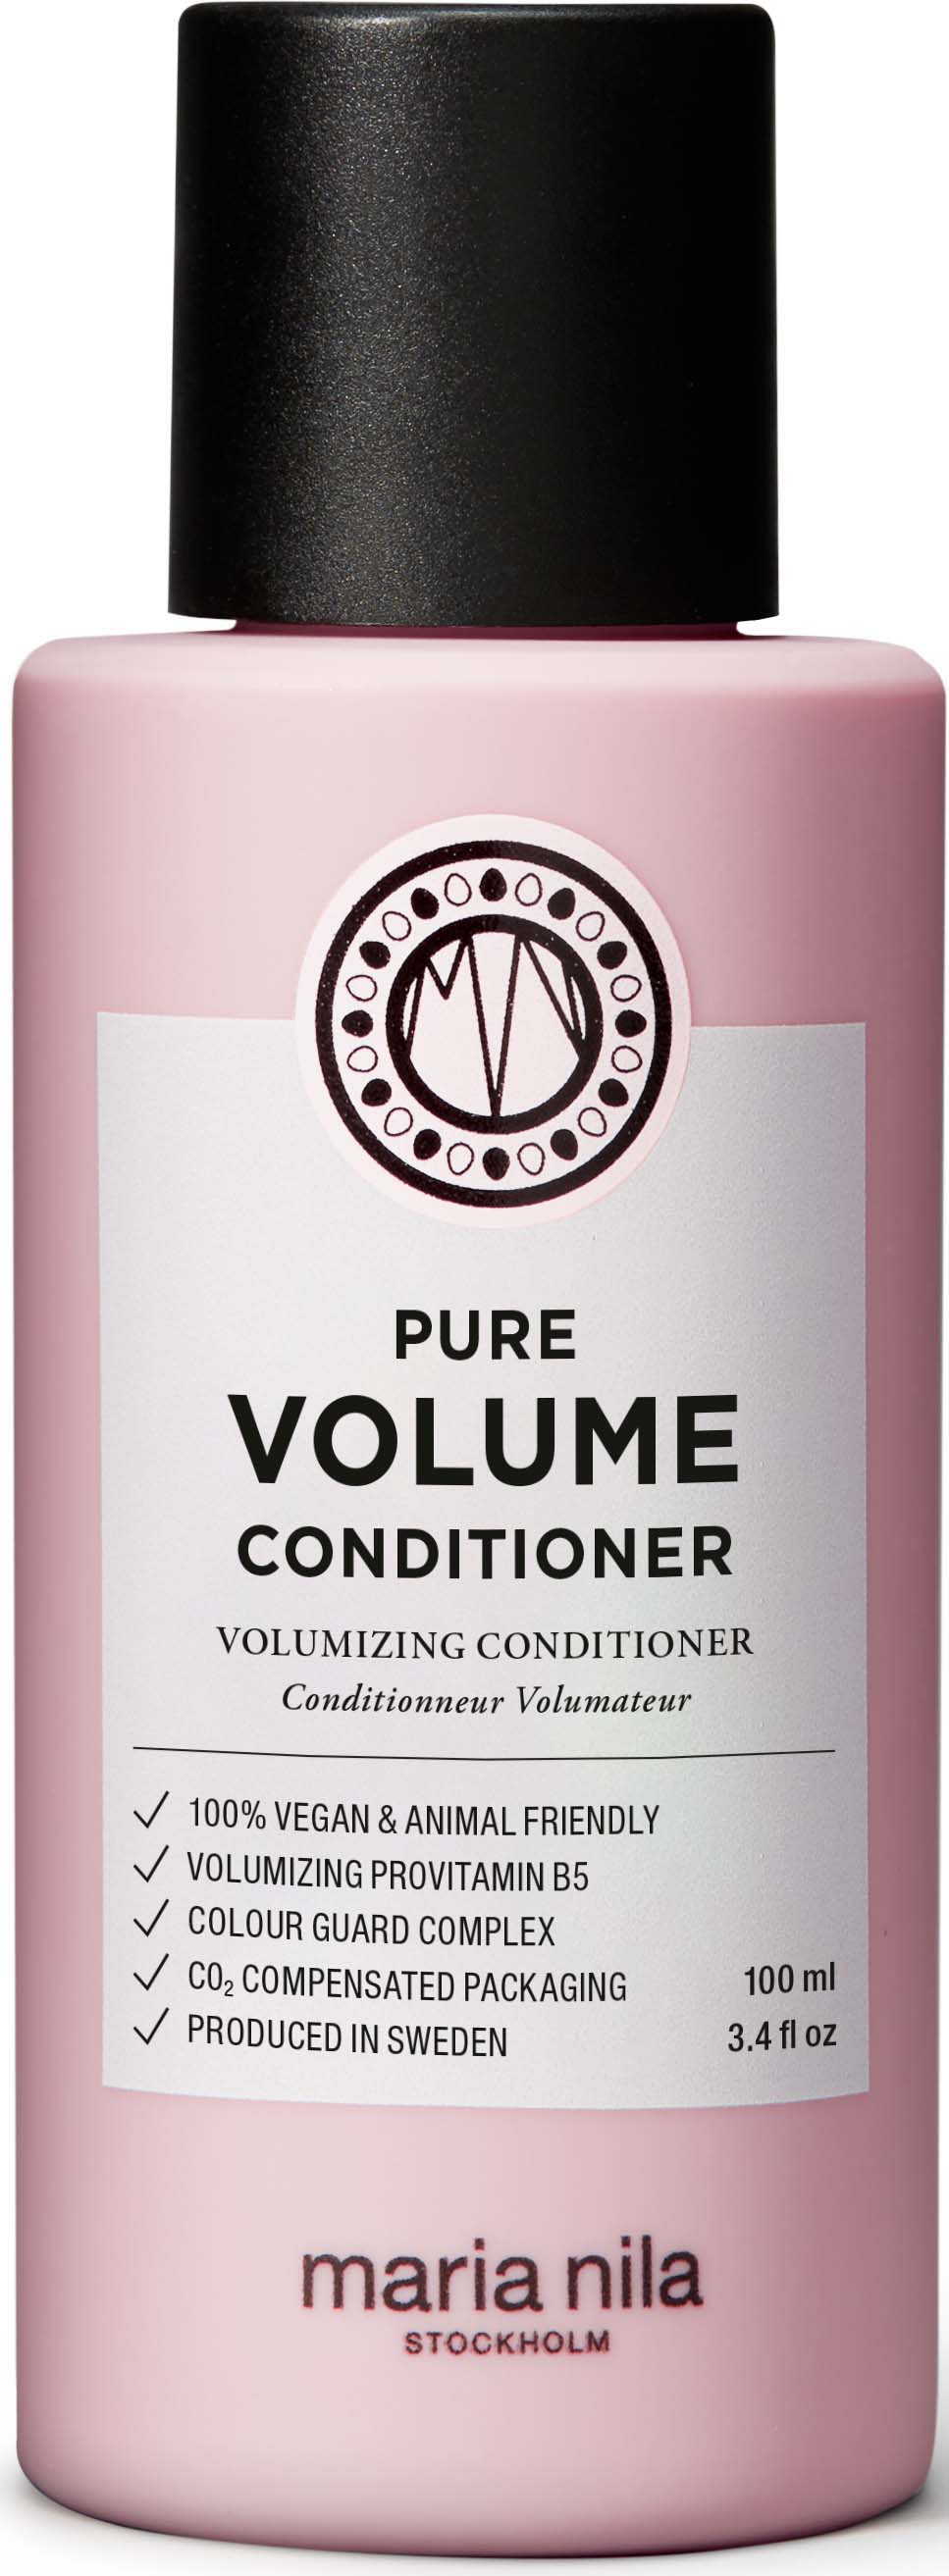 Maria Nila Palett Conditioner Pure Volume 100ml